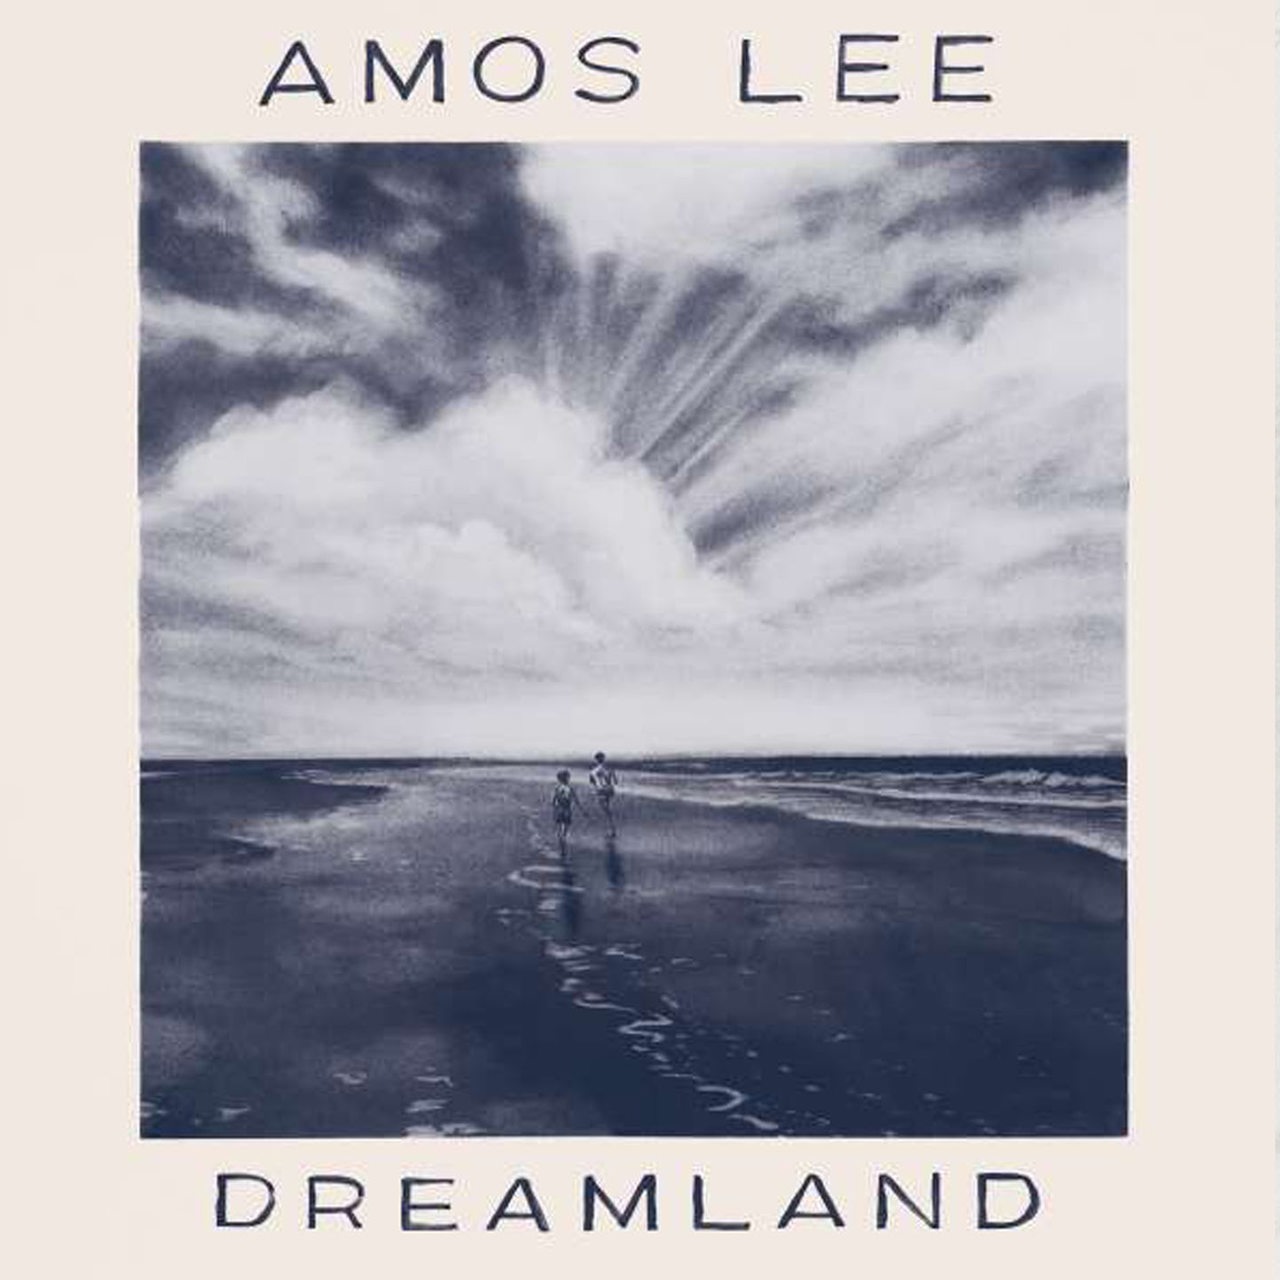 Albumcover "Dreamland" von Amos Lee